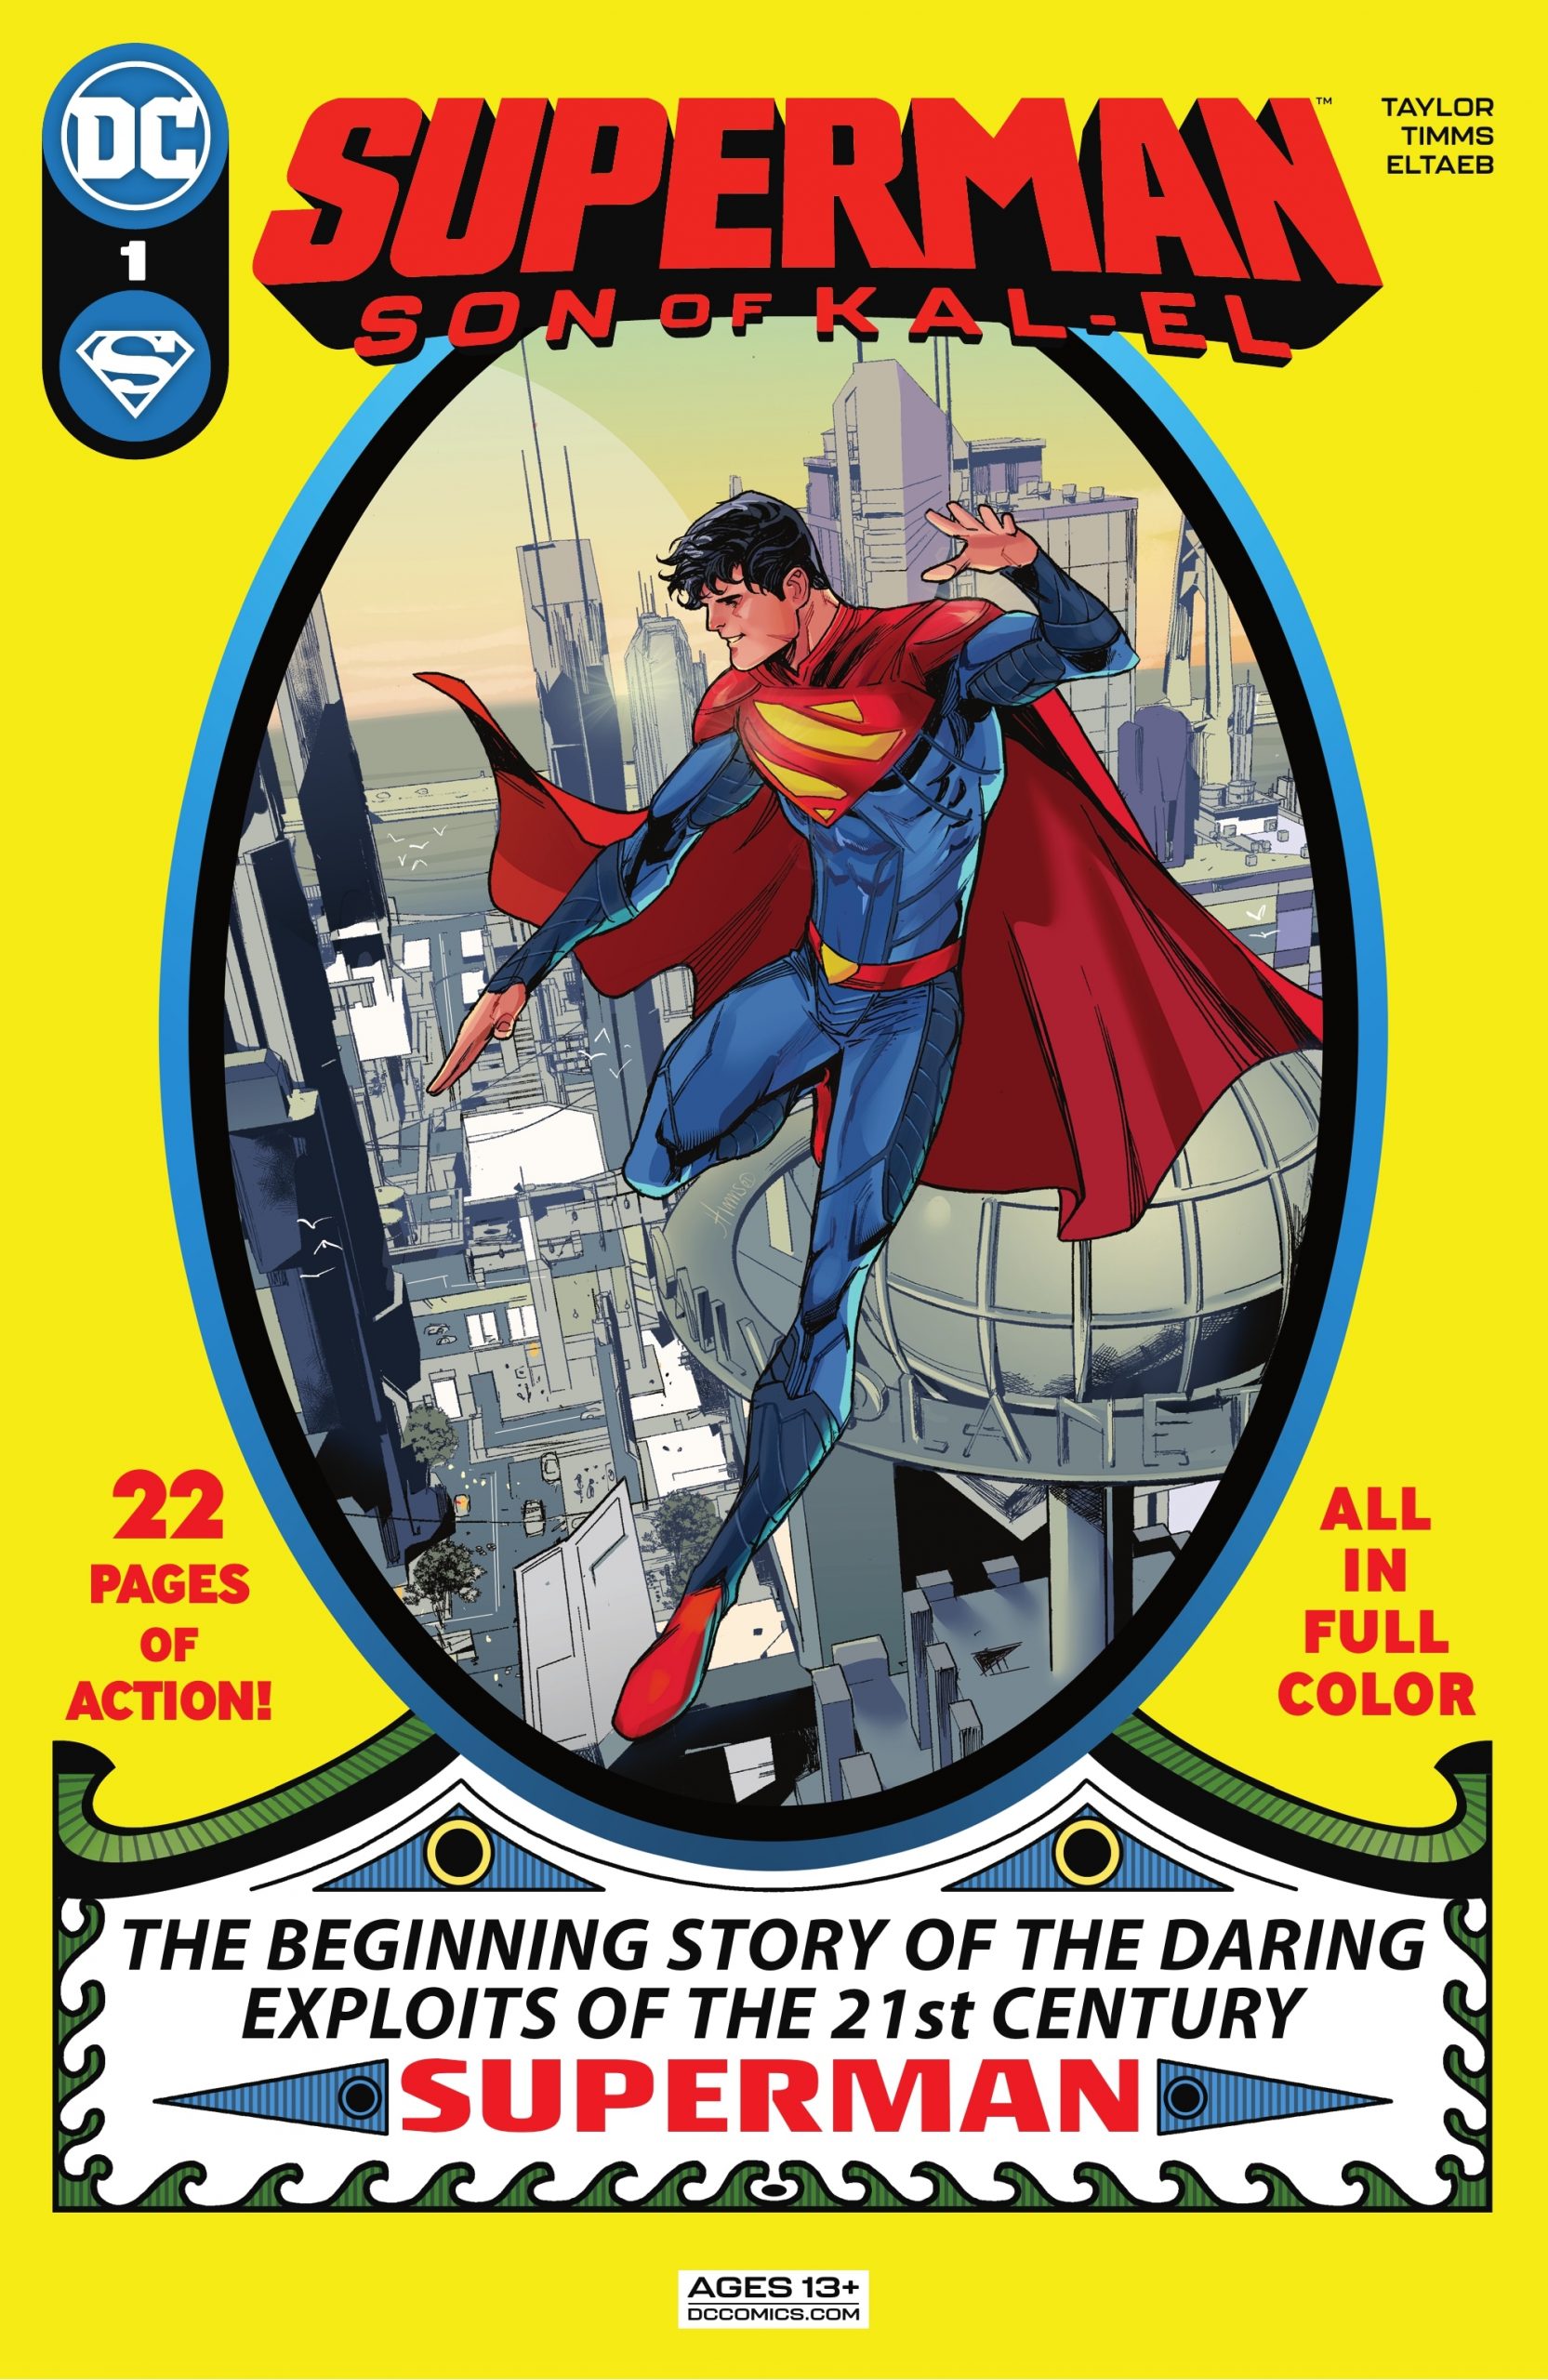 https://langgeek.net/wp-content/uploads/2021/12/Superman-Son-of-Kal-El-2021-001-000-1-scaled.jpg